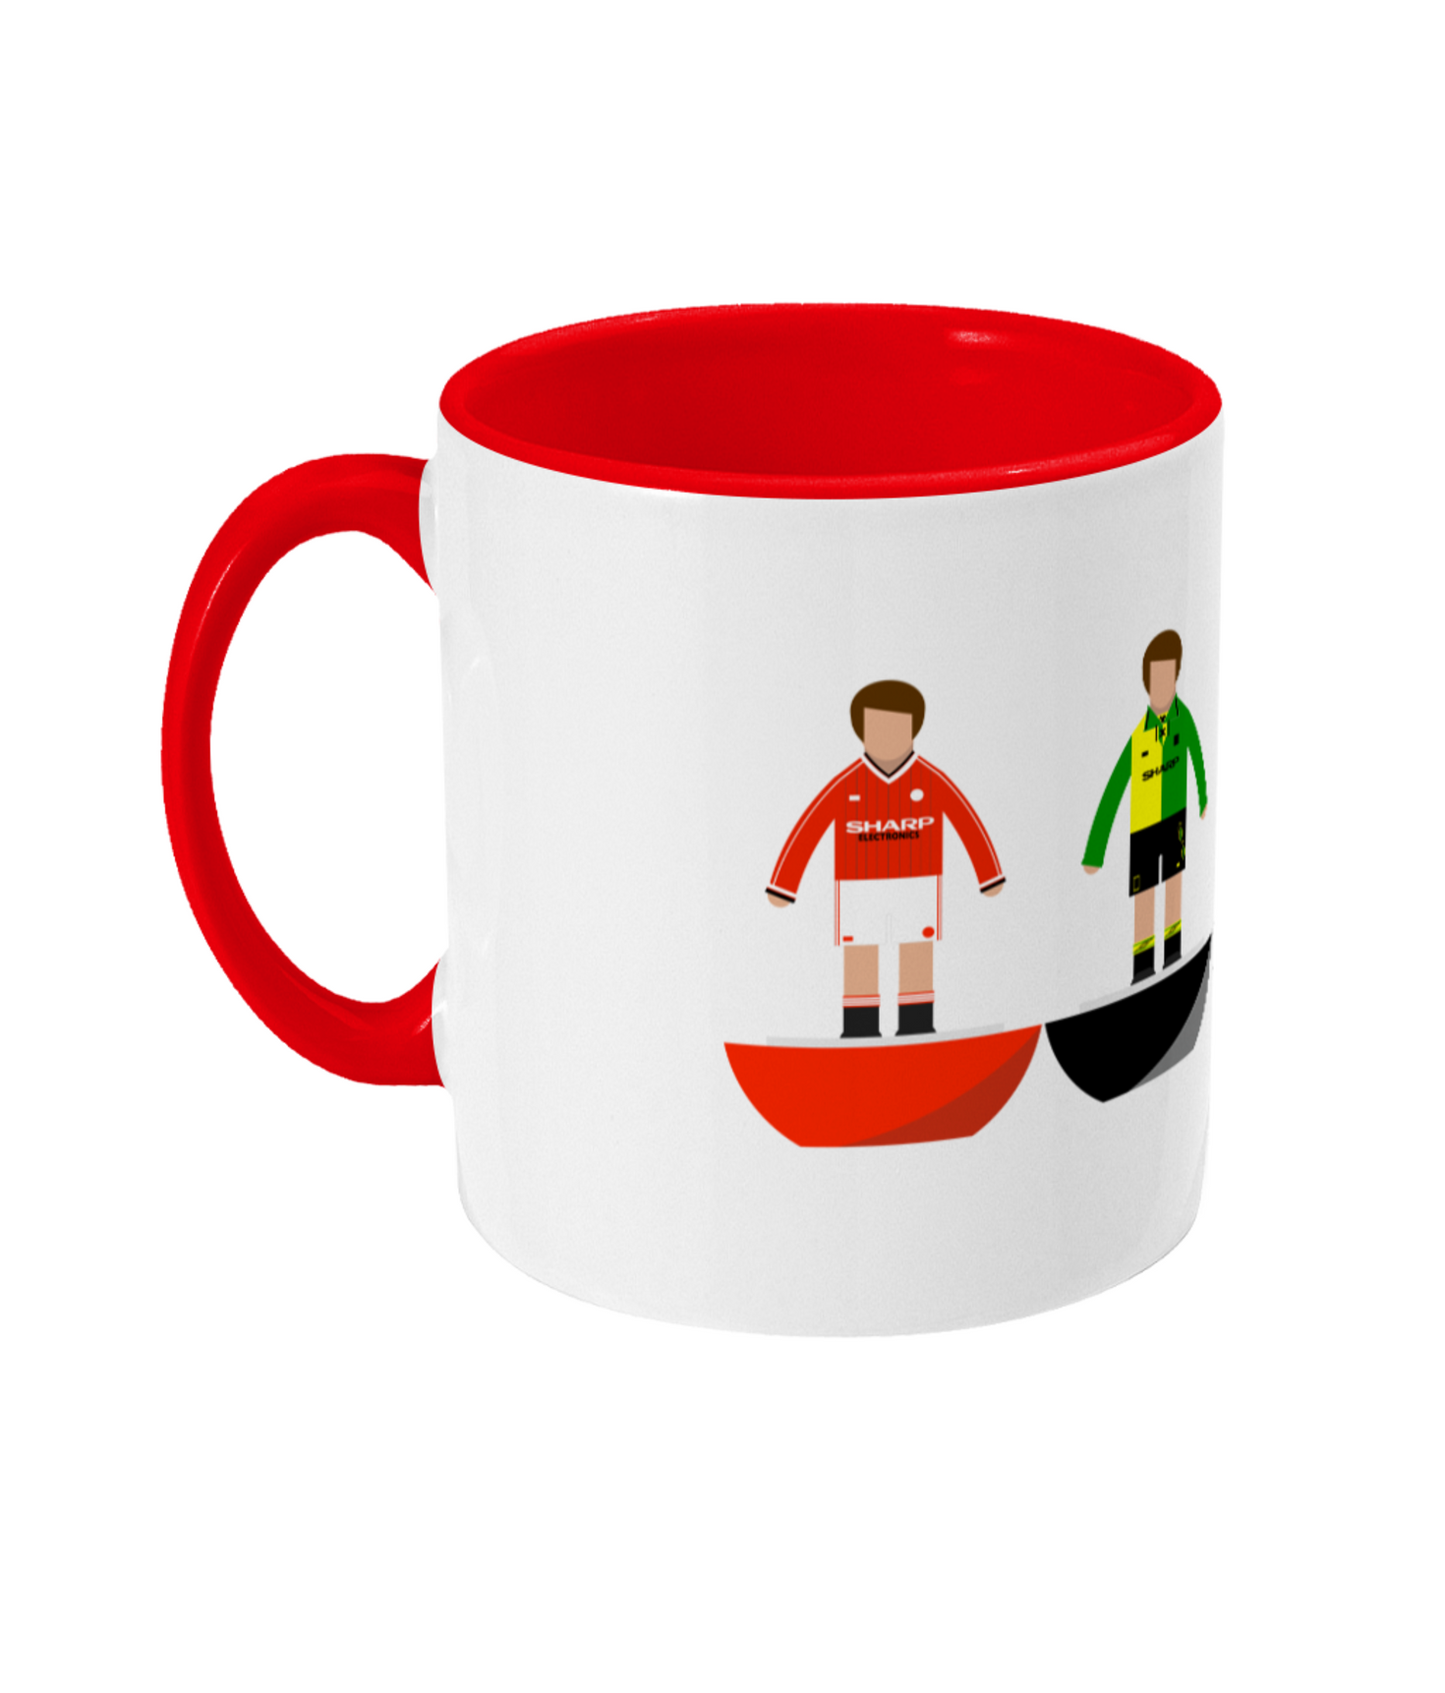 Football Kits 'Manchester United combined' Mug